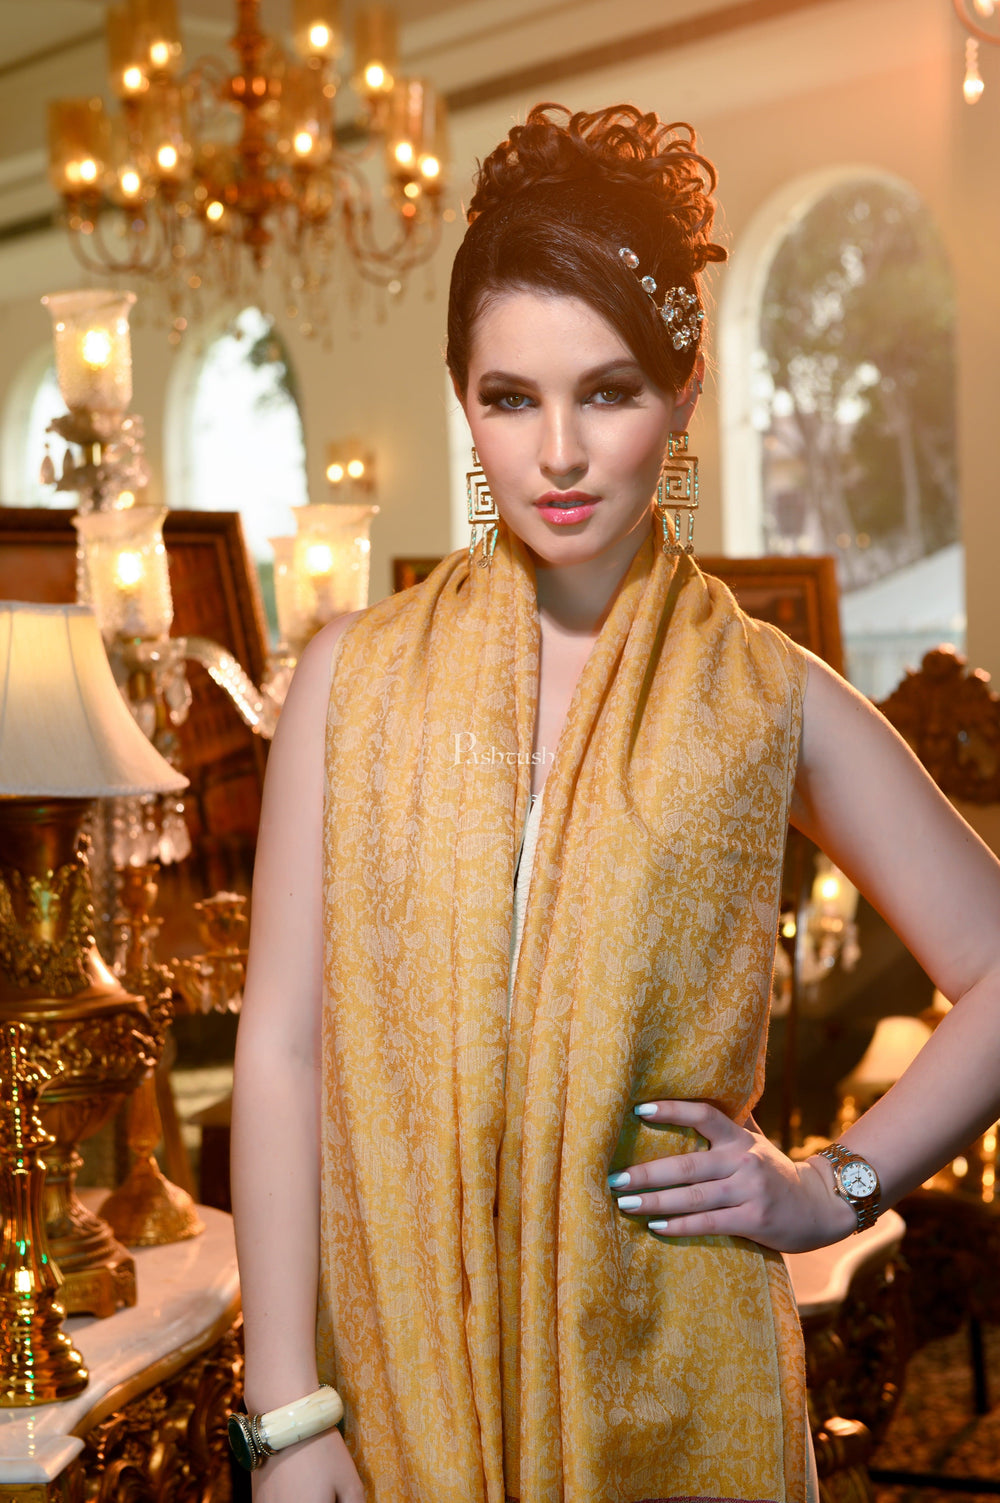 Pashtush India Womens Shawls Pashtush Womens Extra Fine Wool Shawl, Aztec Weave Design, Yellow